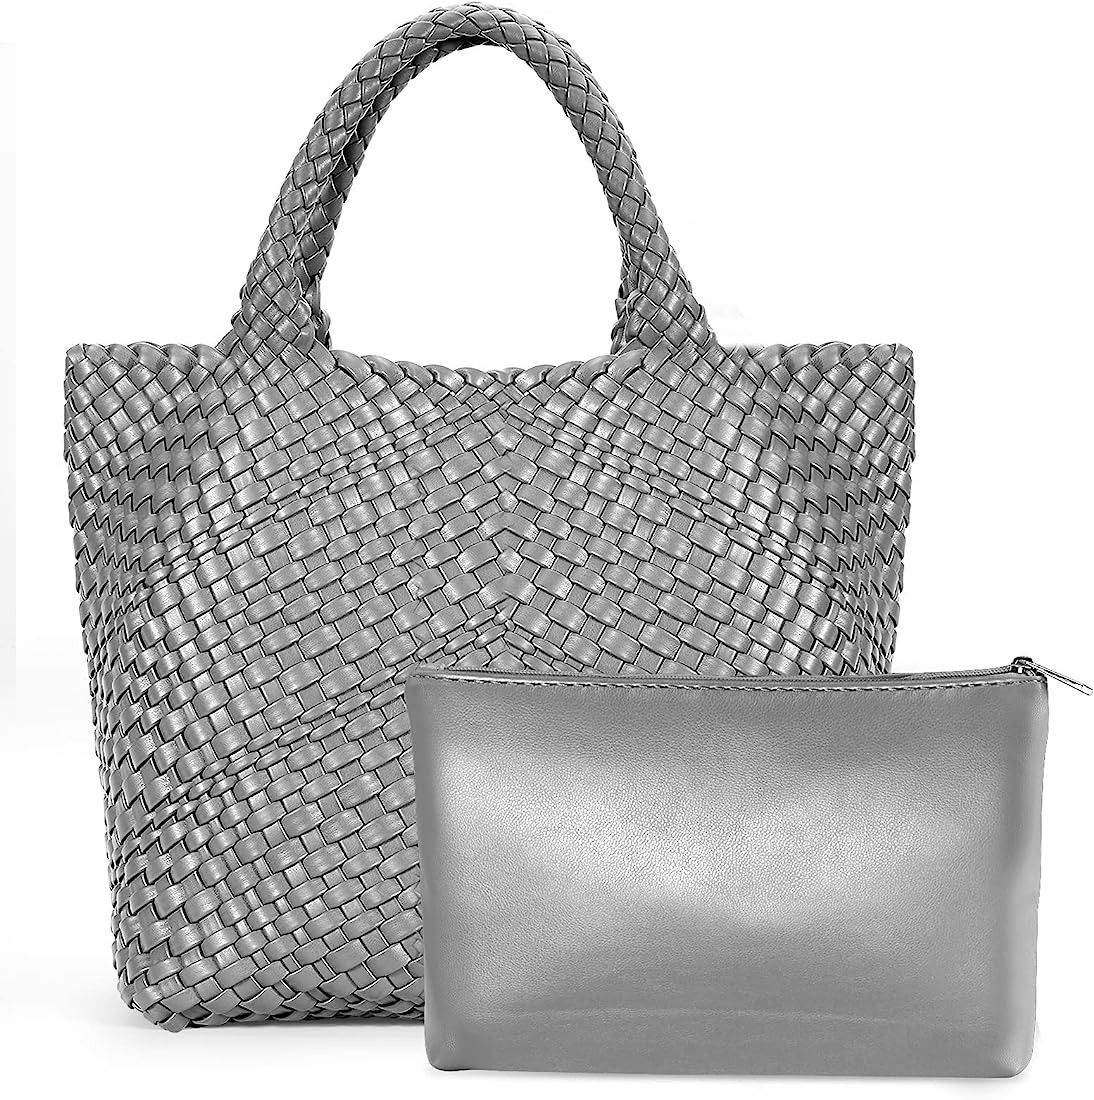 Woven Bag for Women, Fashion Woven Tote Bag Large Capacity, Soft Vegan Leather Hand-woven Handbag... | Amazon (US)